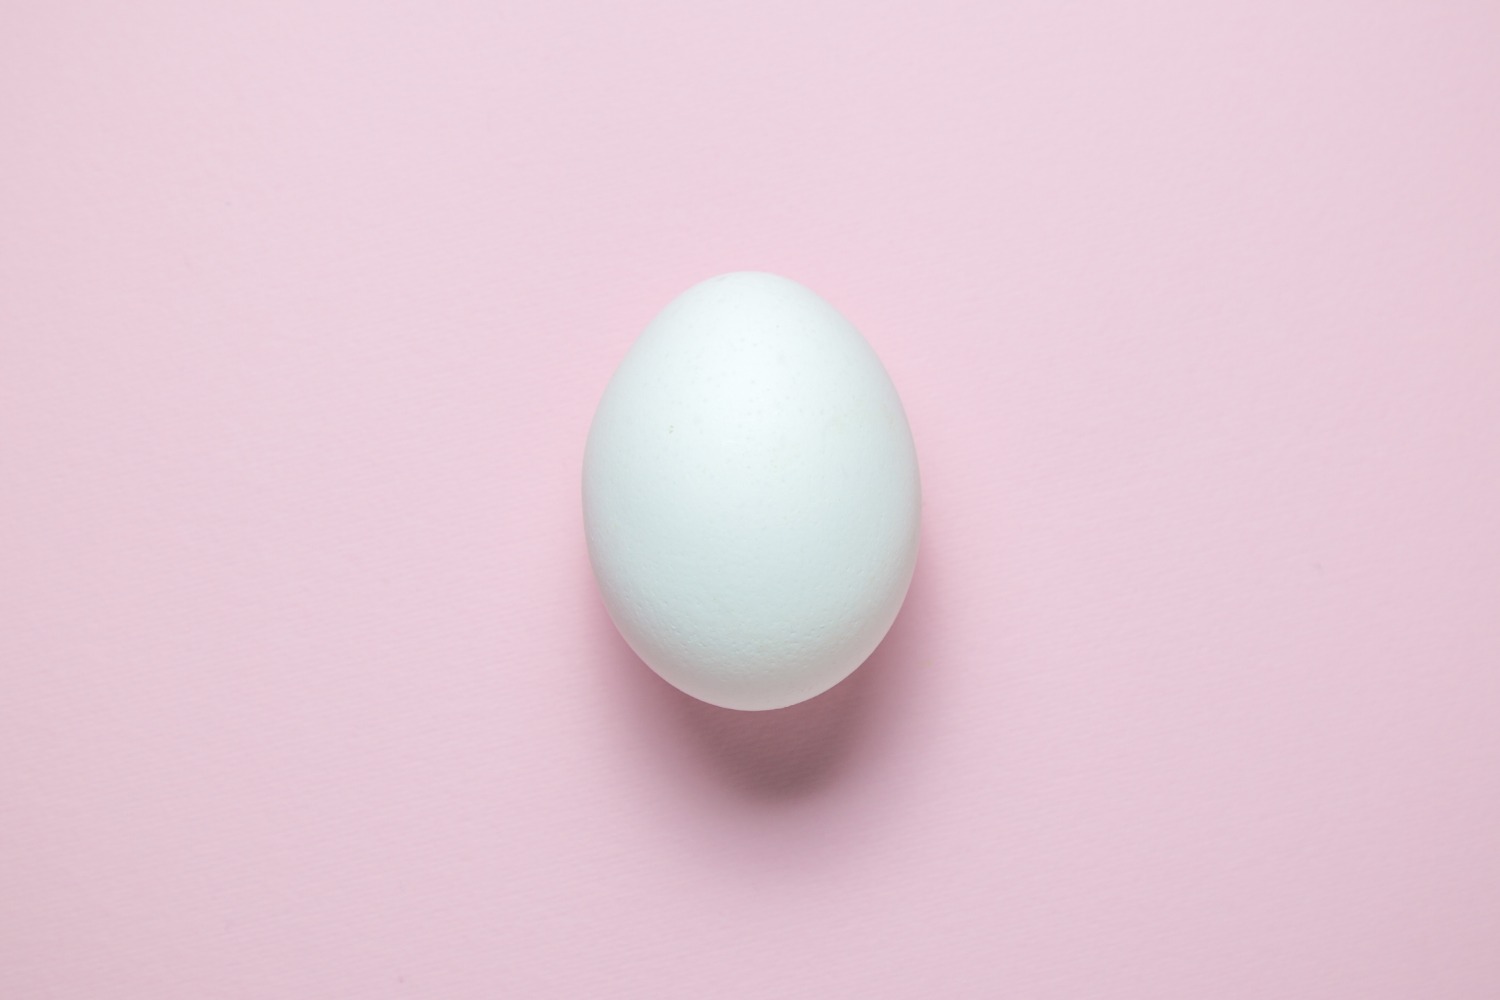 Egg on pink background